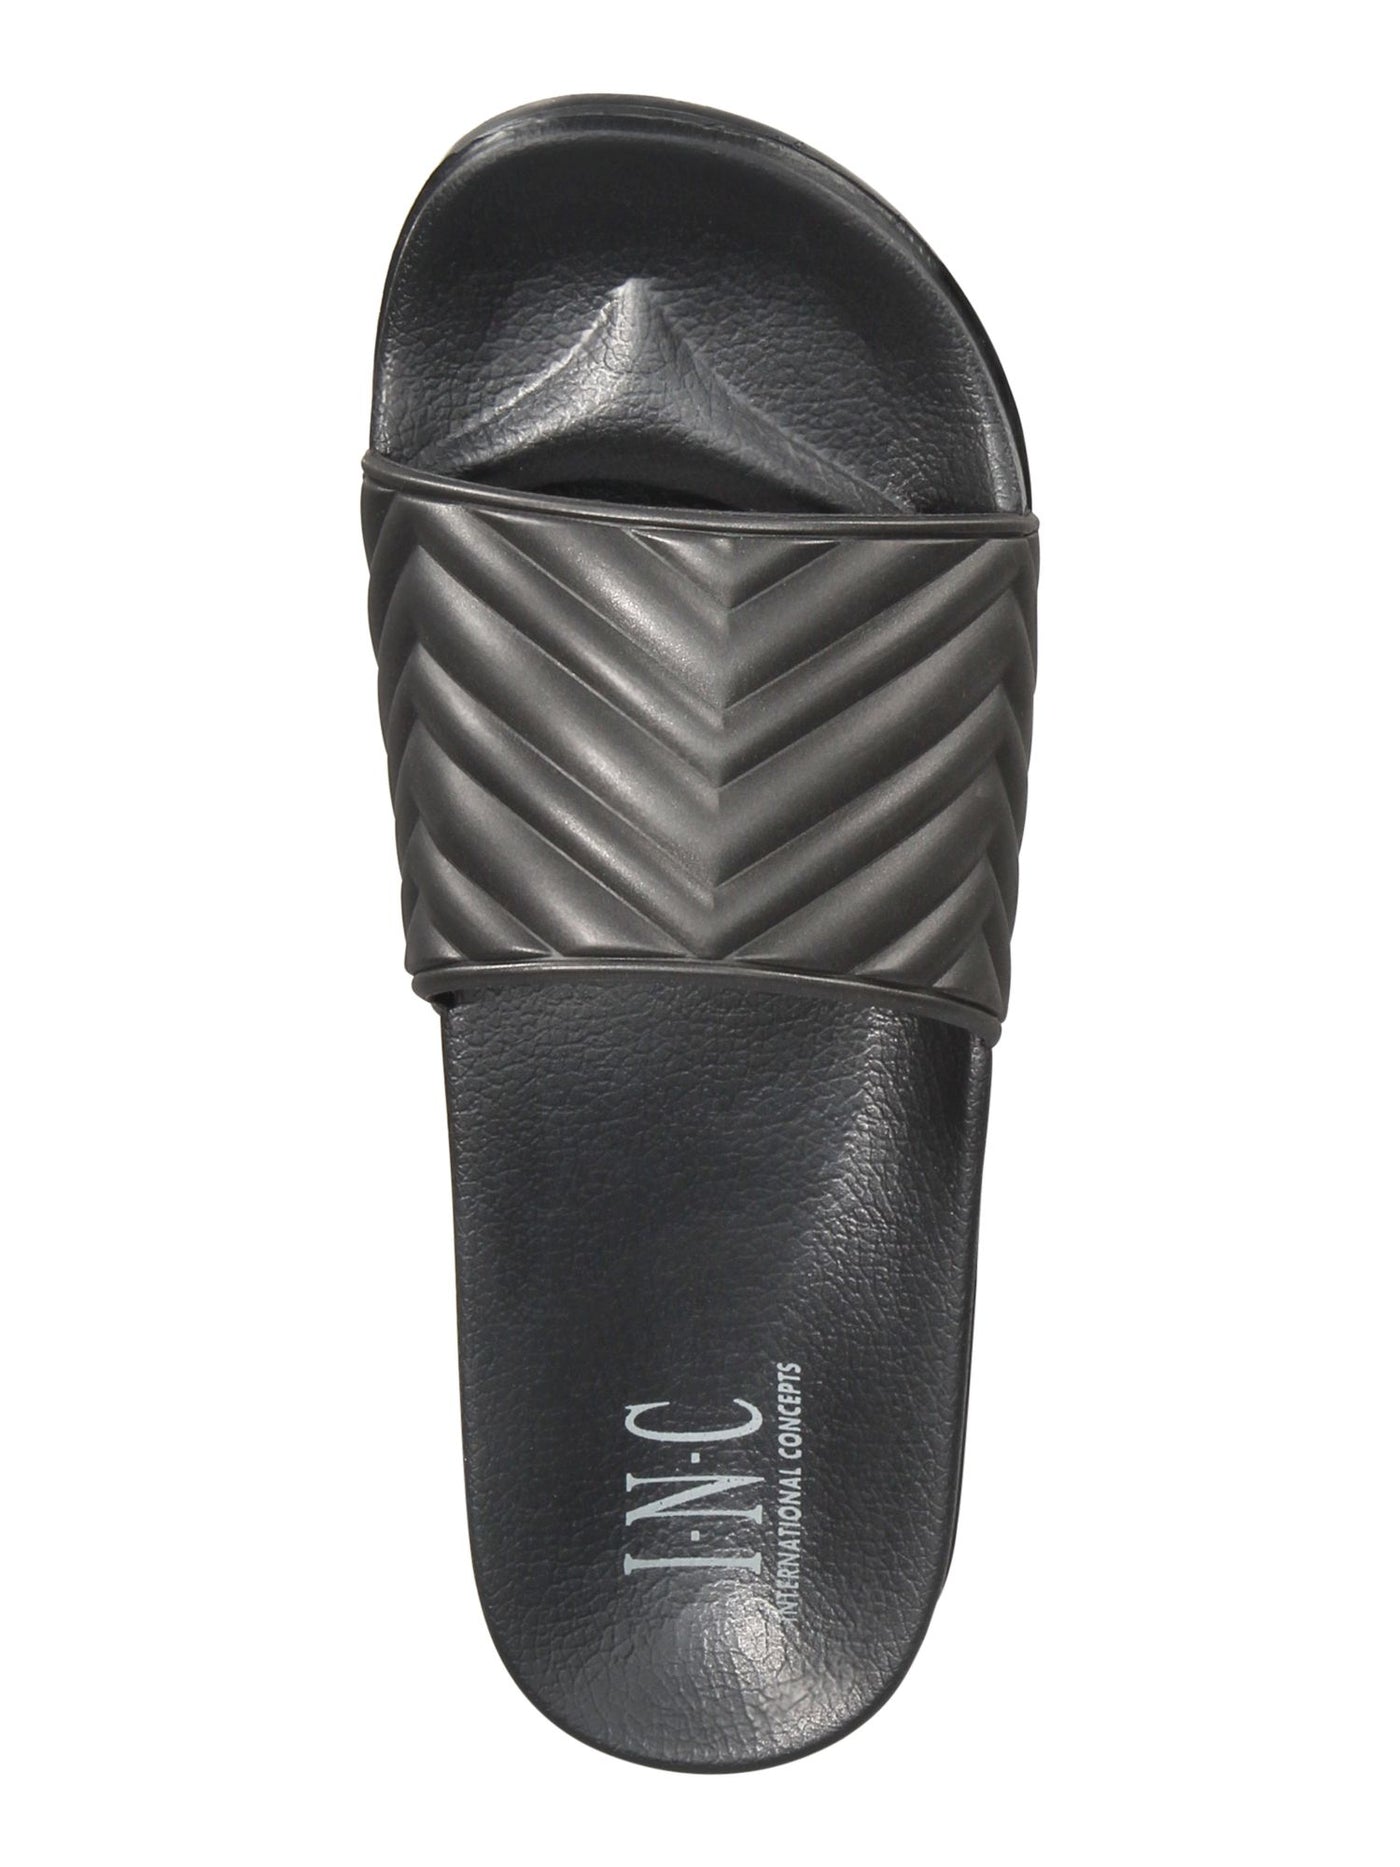 INC Mens Black Quilted Xander Open Toe Slip On Slide Sandals Shoes 10 M